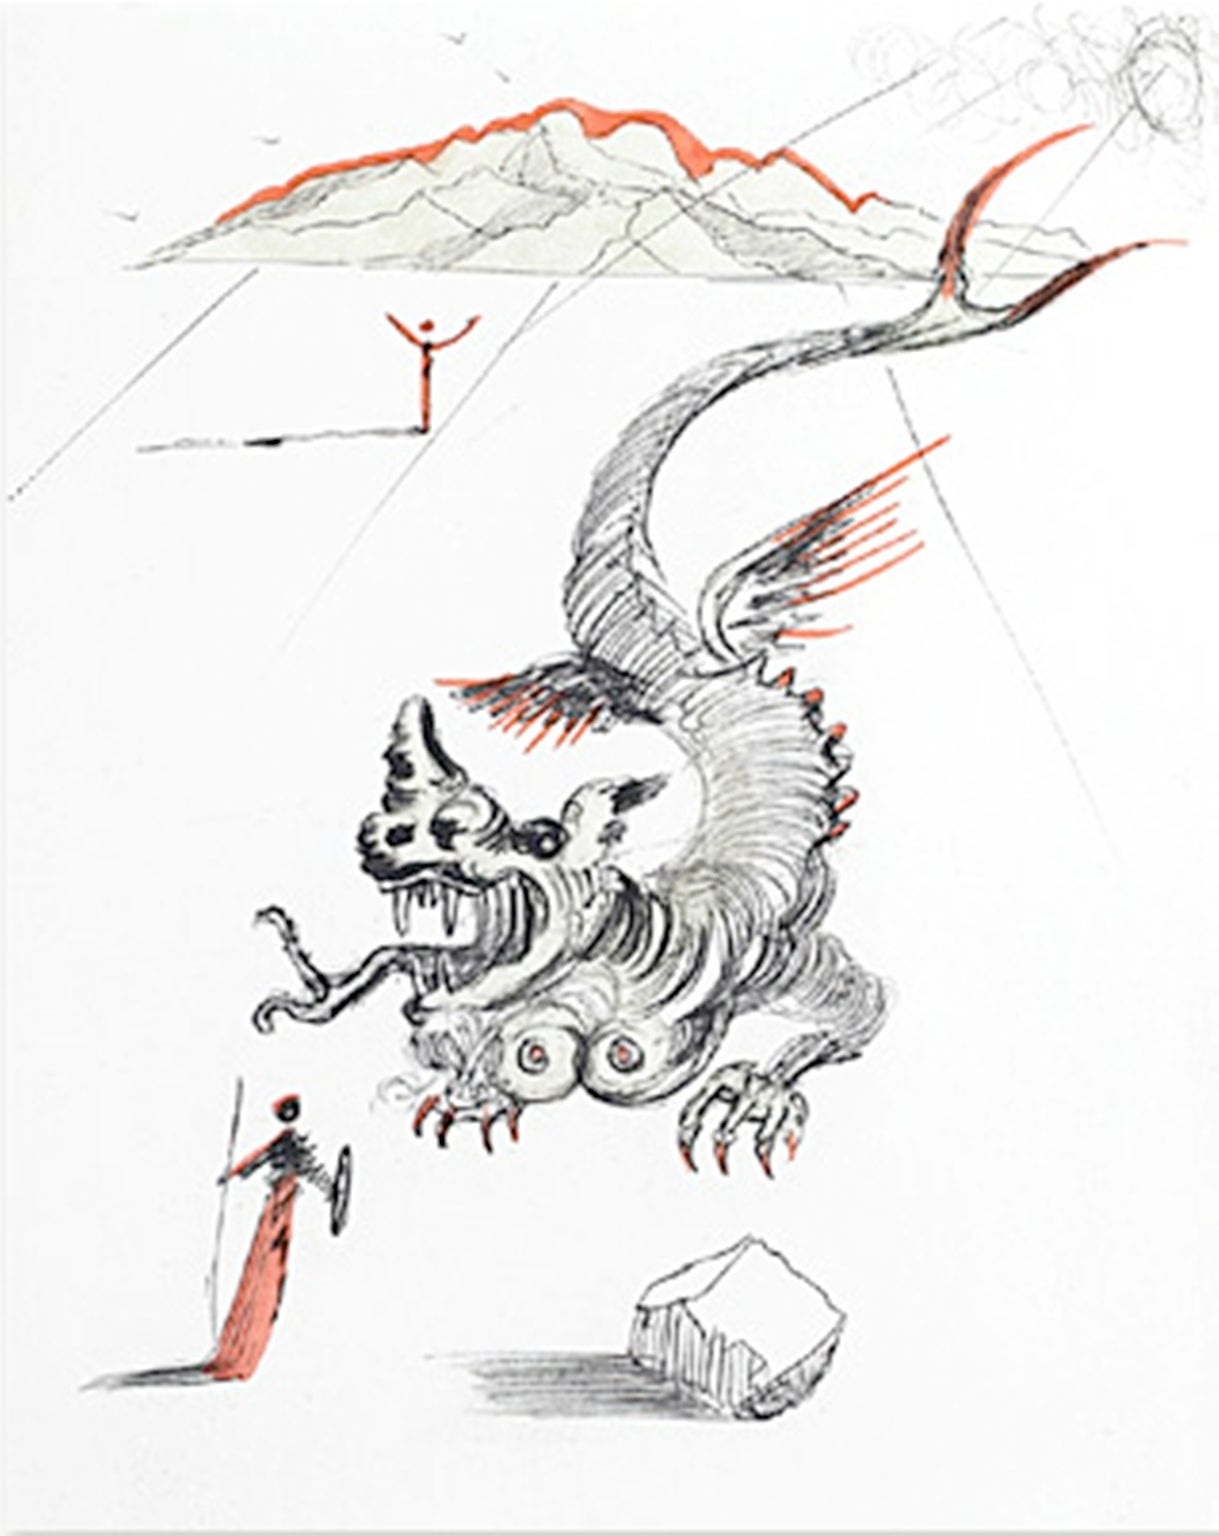 Le Dragon (the Dragon) - Print by Salvador Dalí